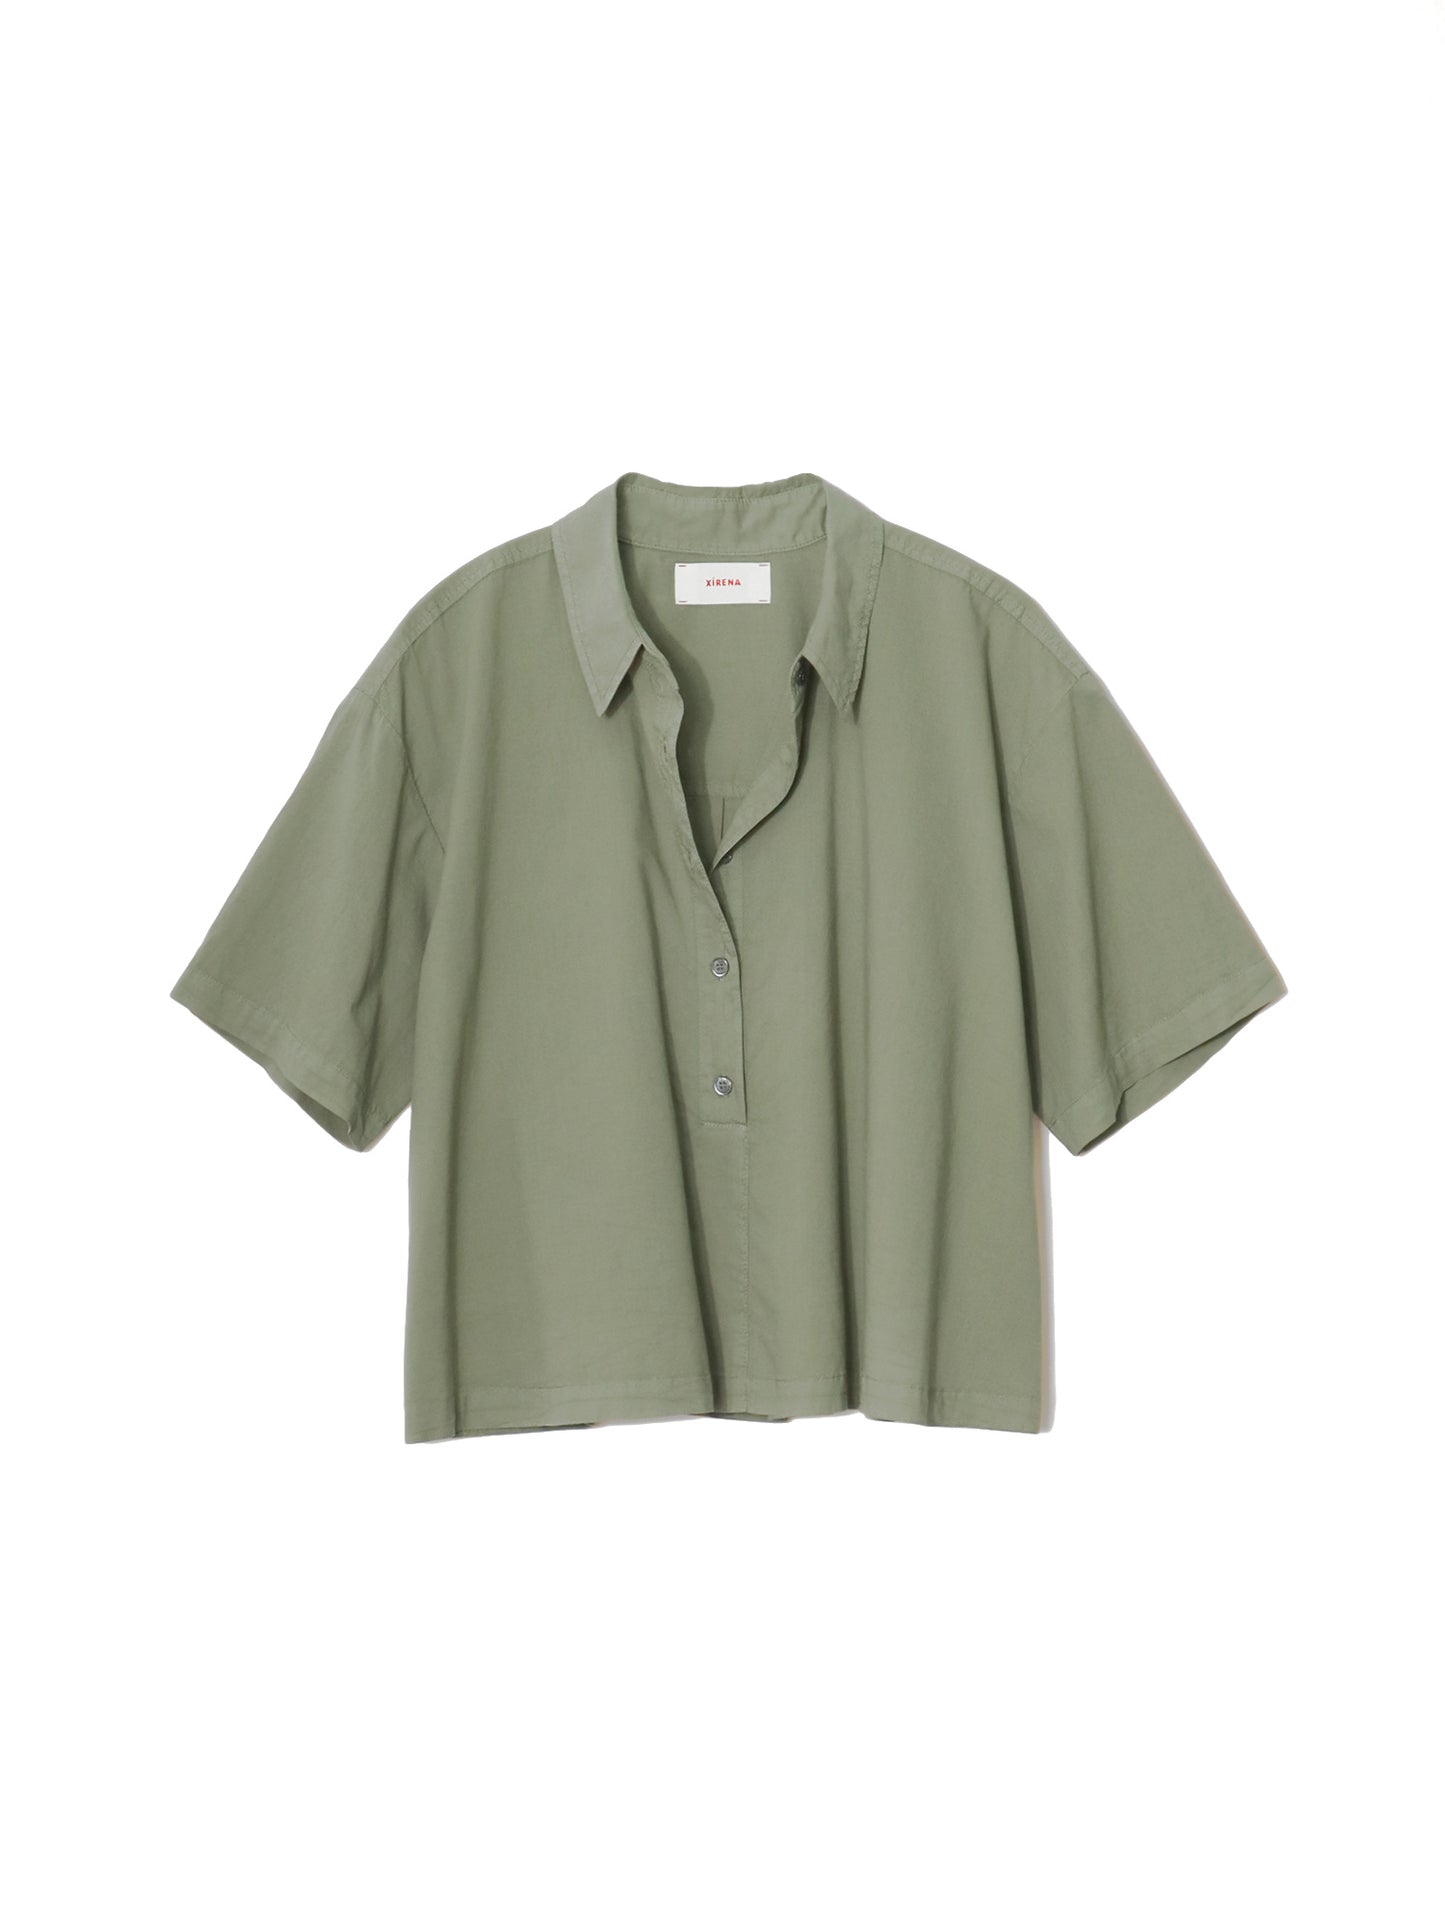 Ansel Poplin Shirt in Mossy Green